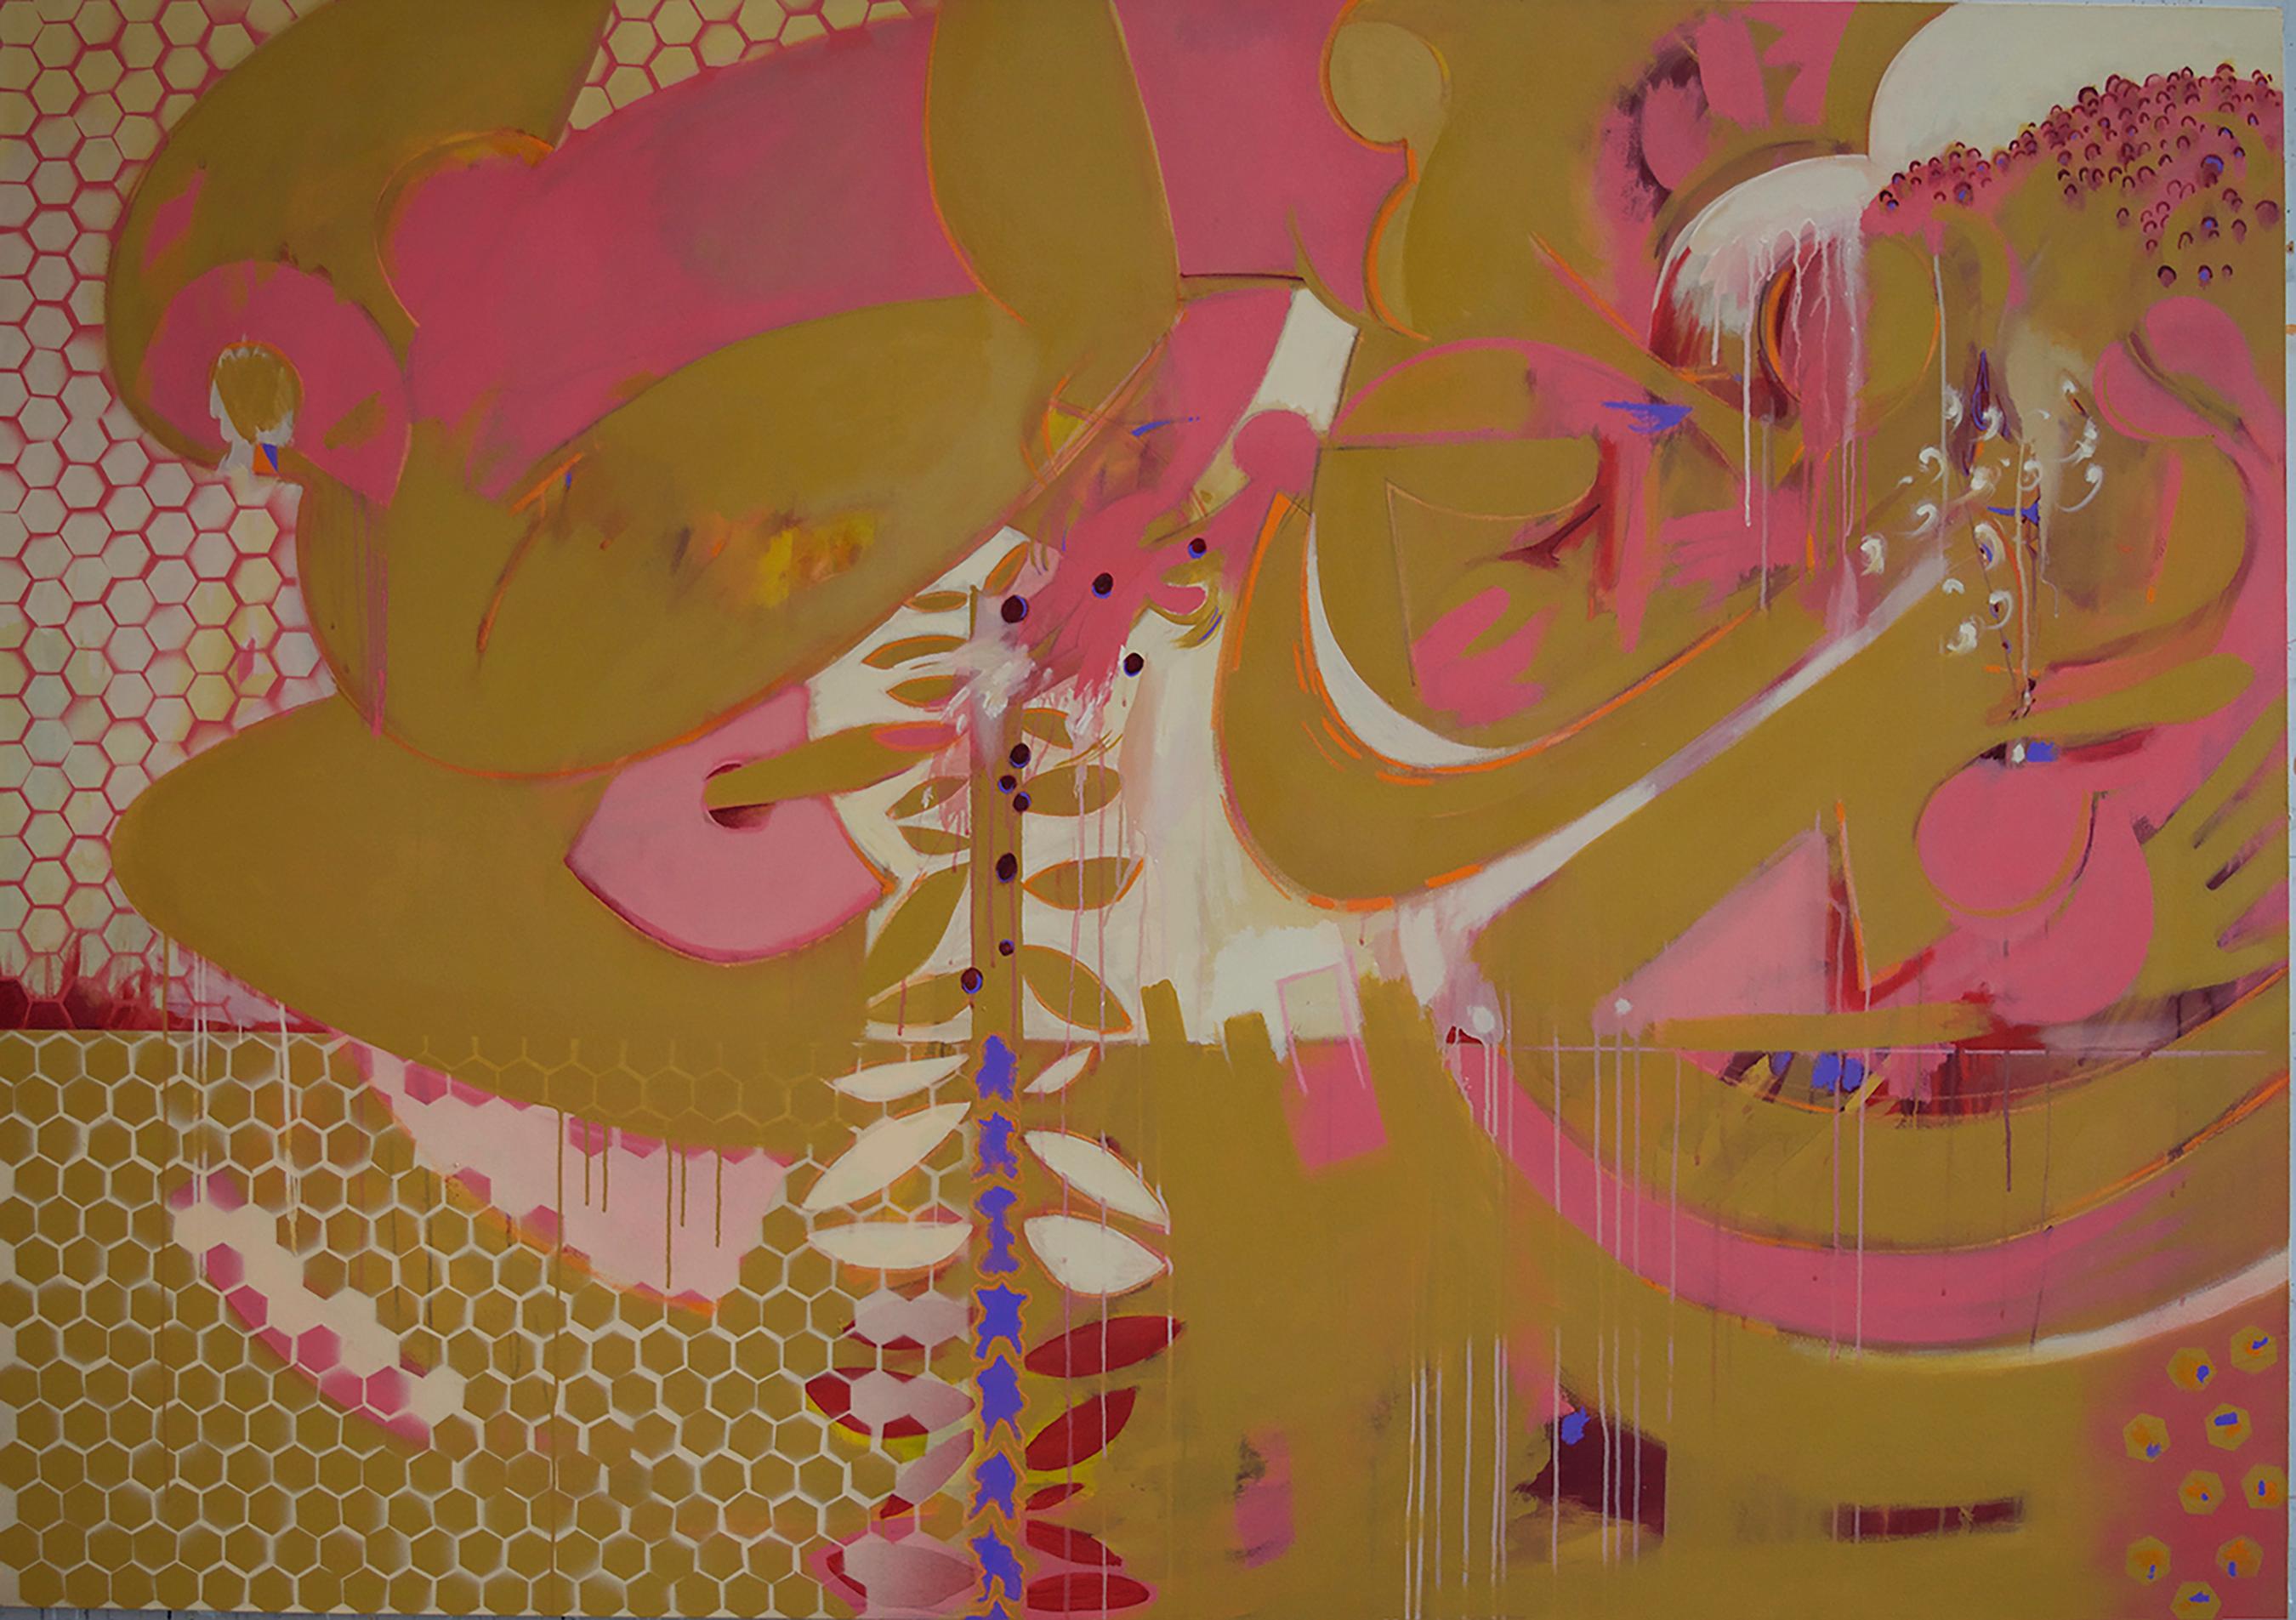 Paul Thomas Abstract Painting - Its still life 7 - Abstract, Mustard, Pink, white, Honeycomb shapes